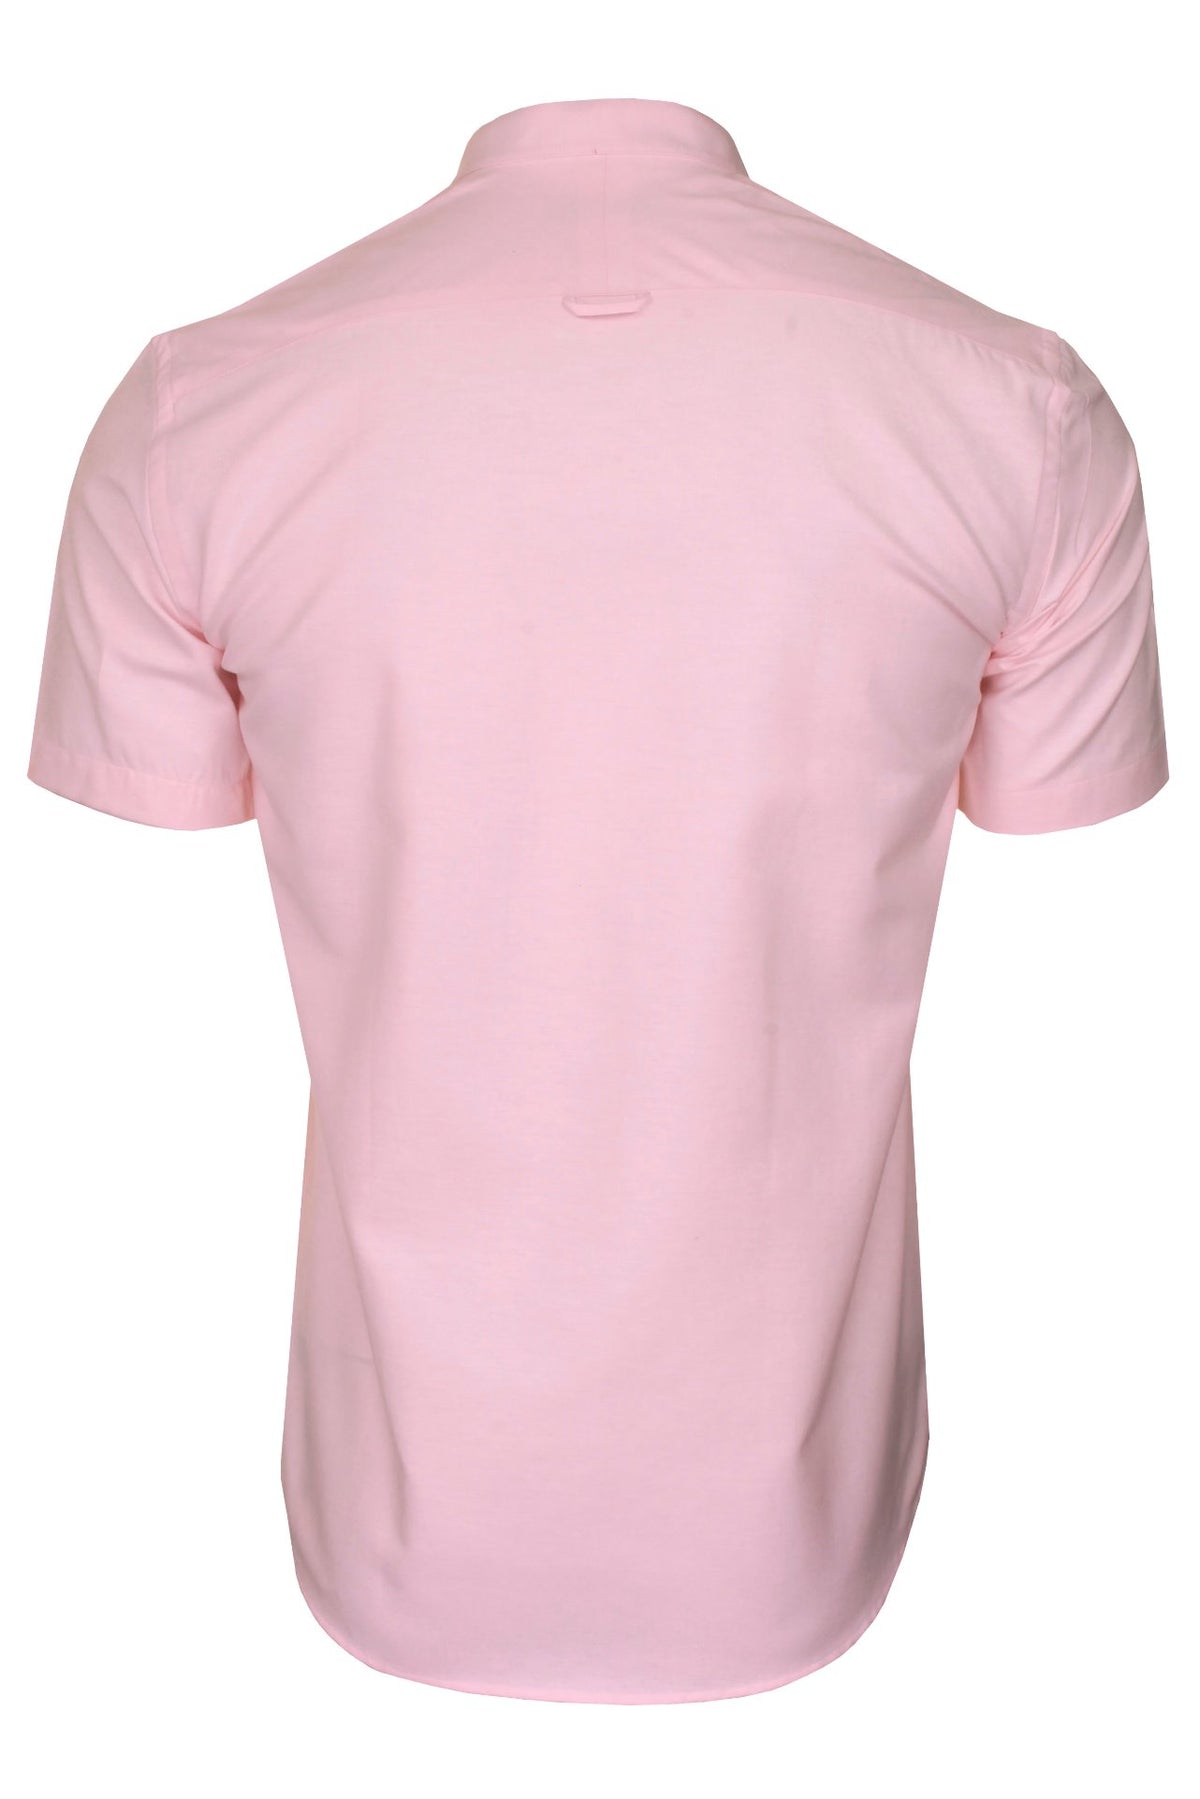 Xact Men's Grandad Collar Oxford Shirt Slim Fit Short Sleeved, 03, Xsh1022, Soft Pink